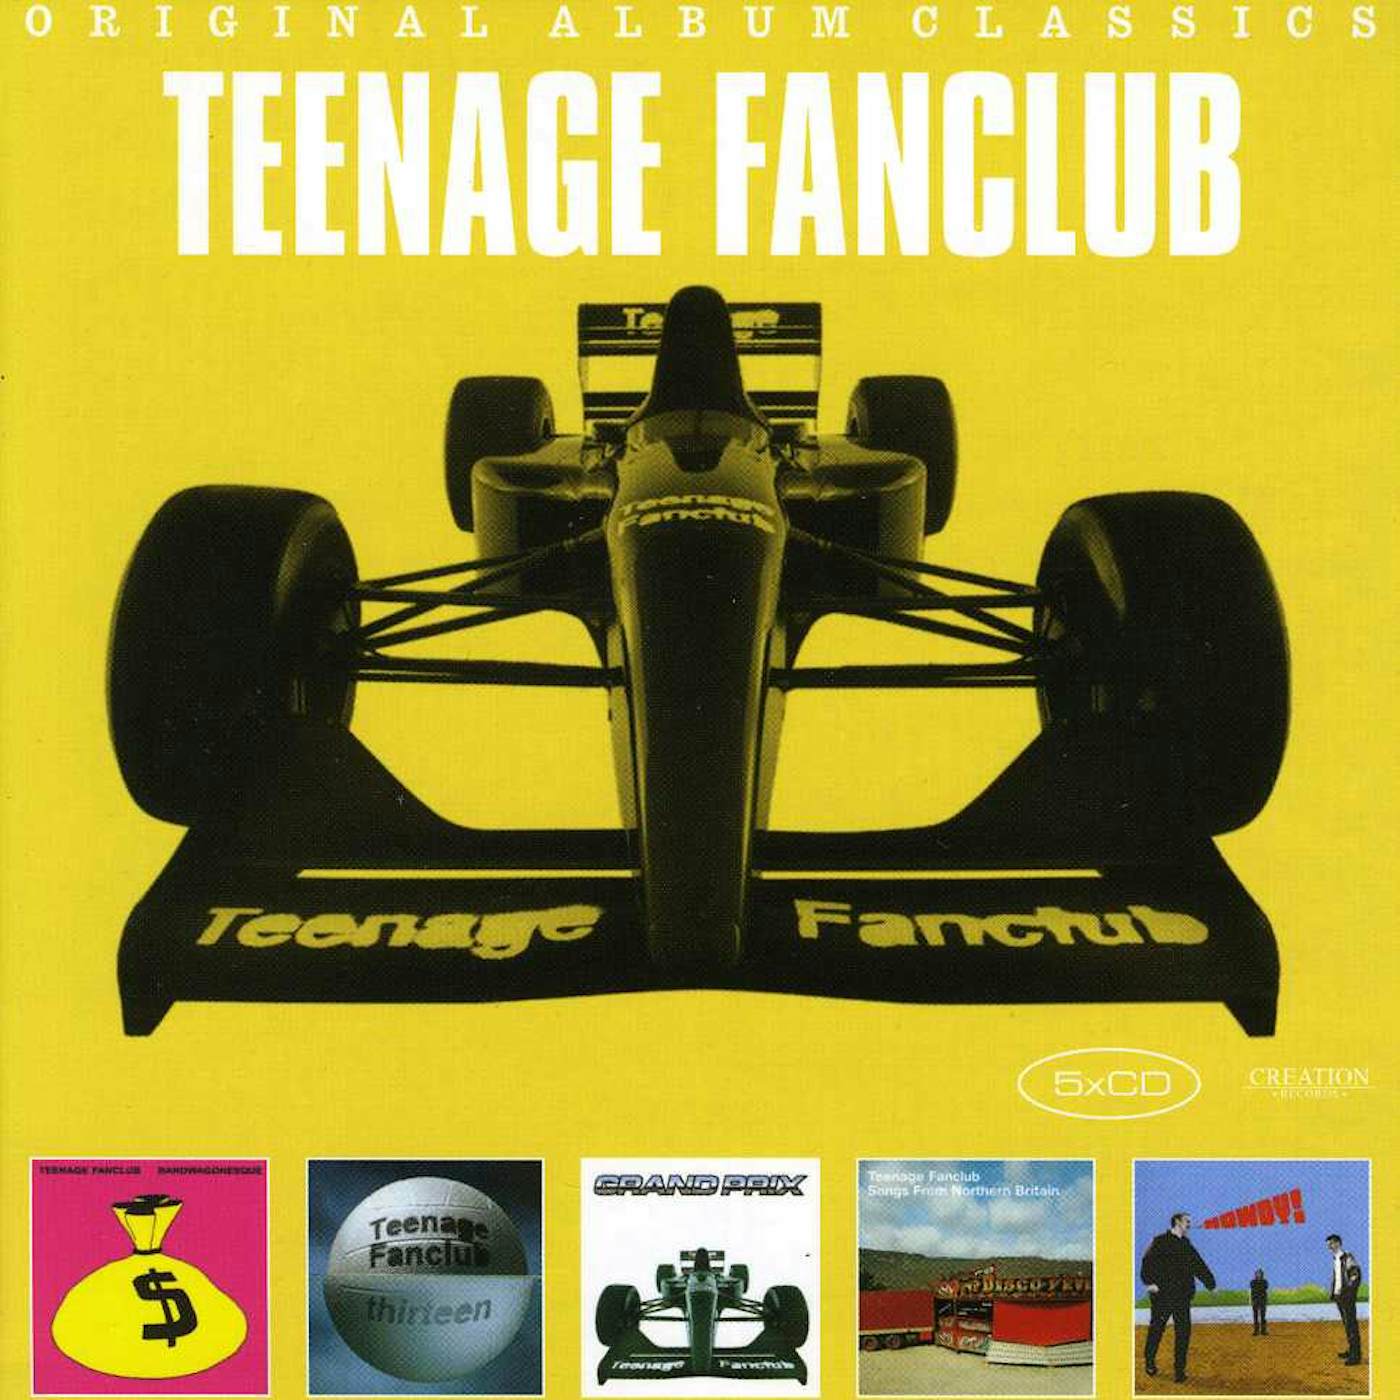 Teenage Fanclub ORIGINAL ALBUM CLASSICS CD